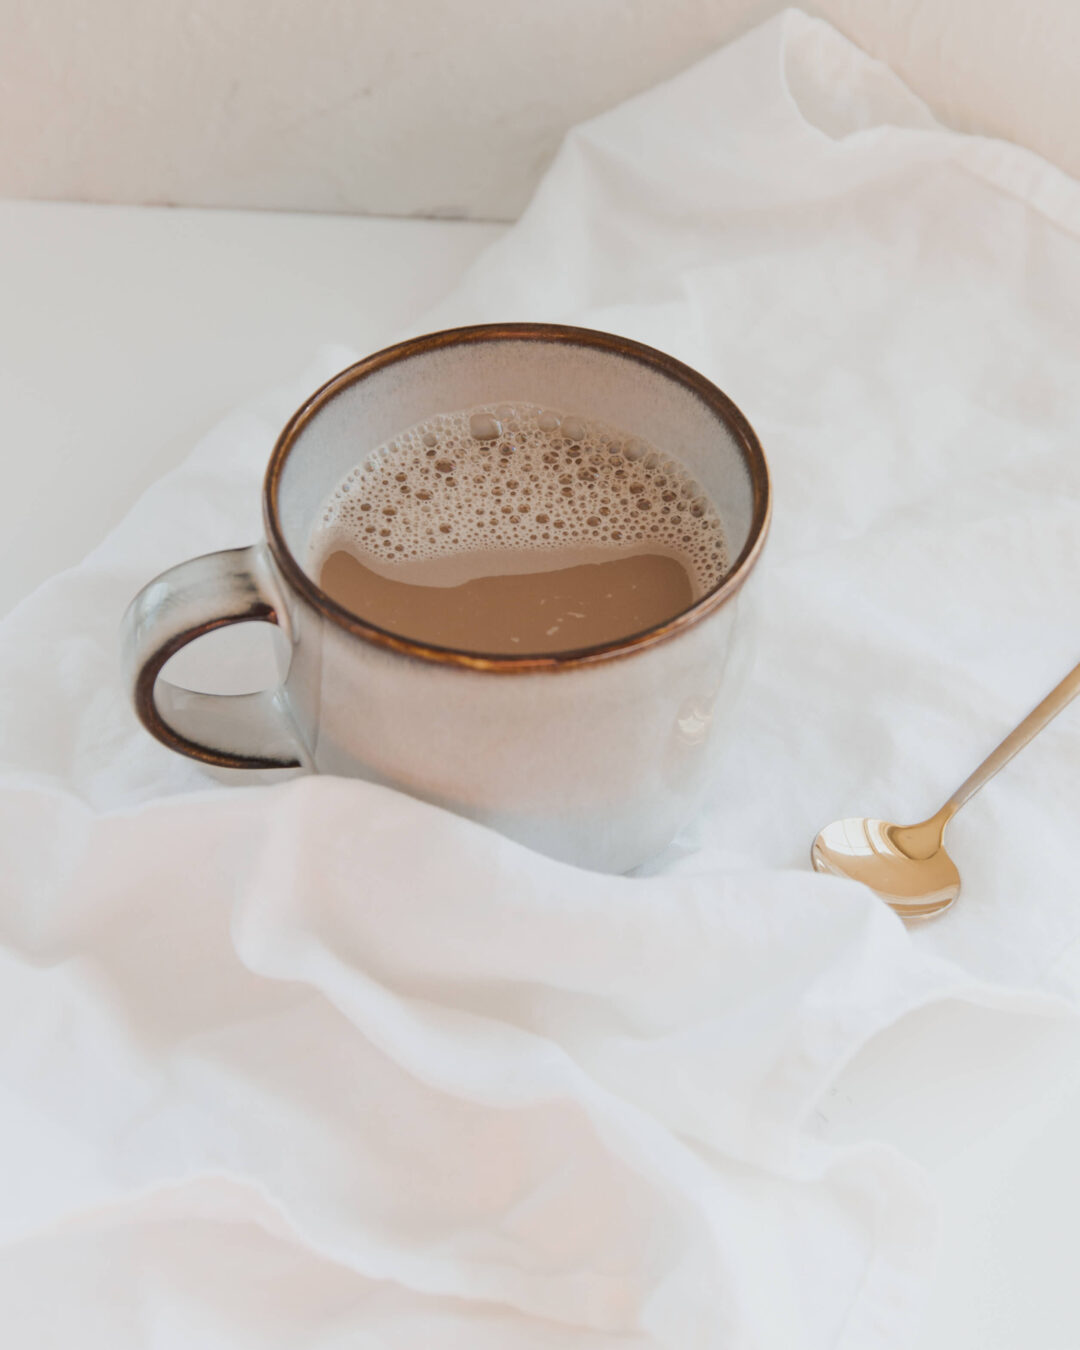 London Fog Tea Latte at Home | Twinspiration